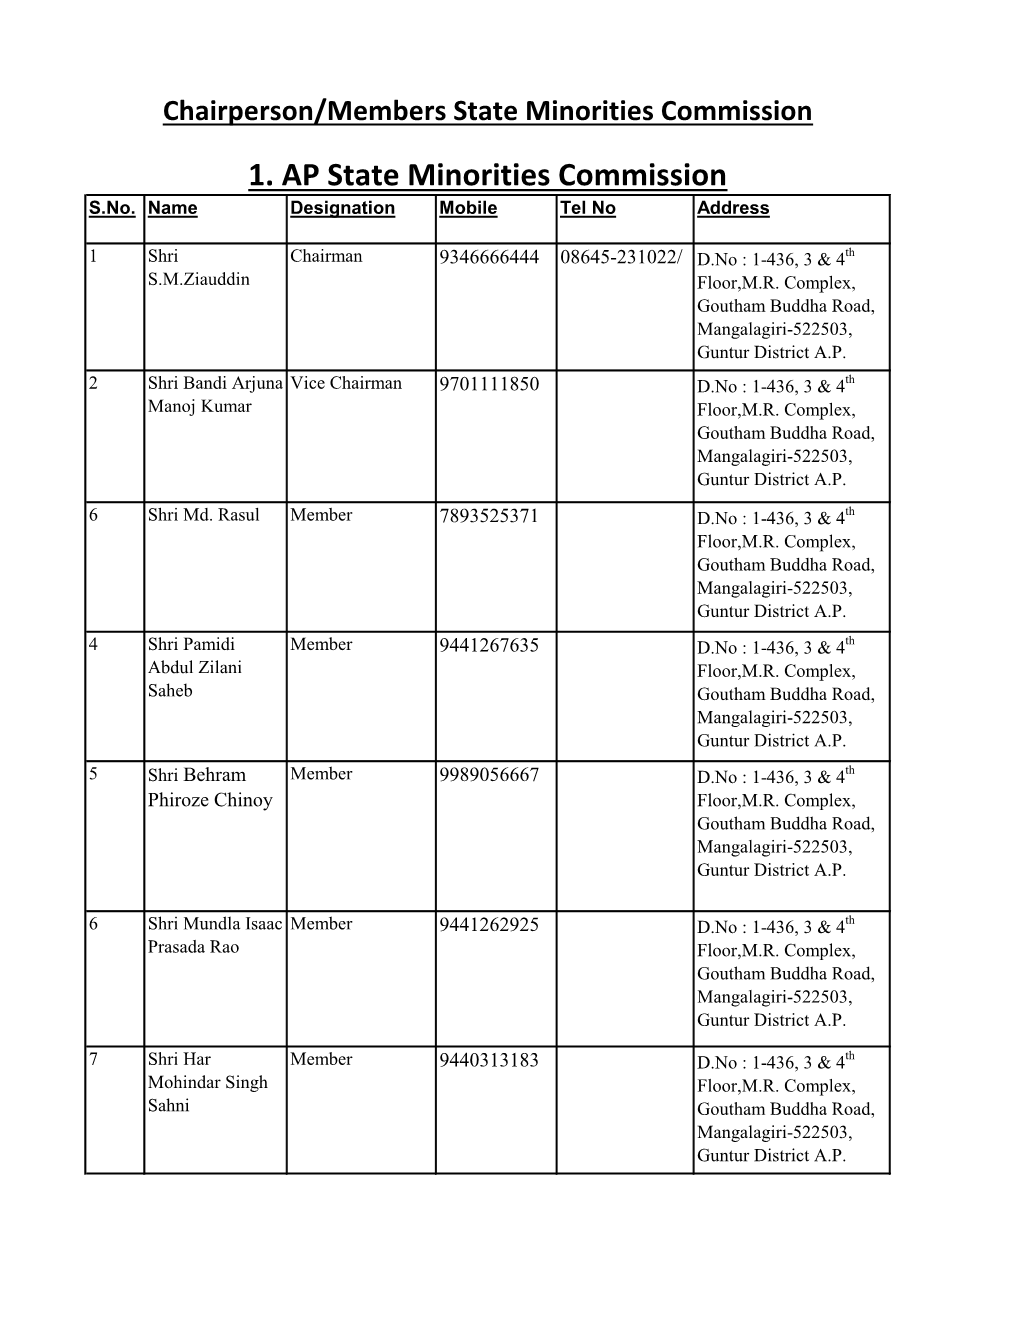 1. AP State Minorities Commission S.No